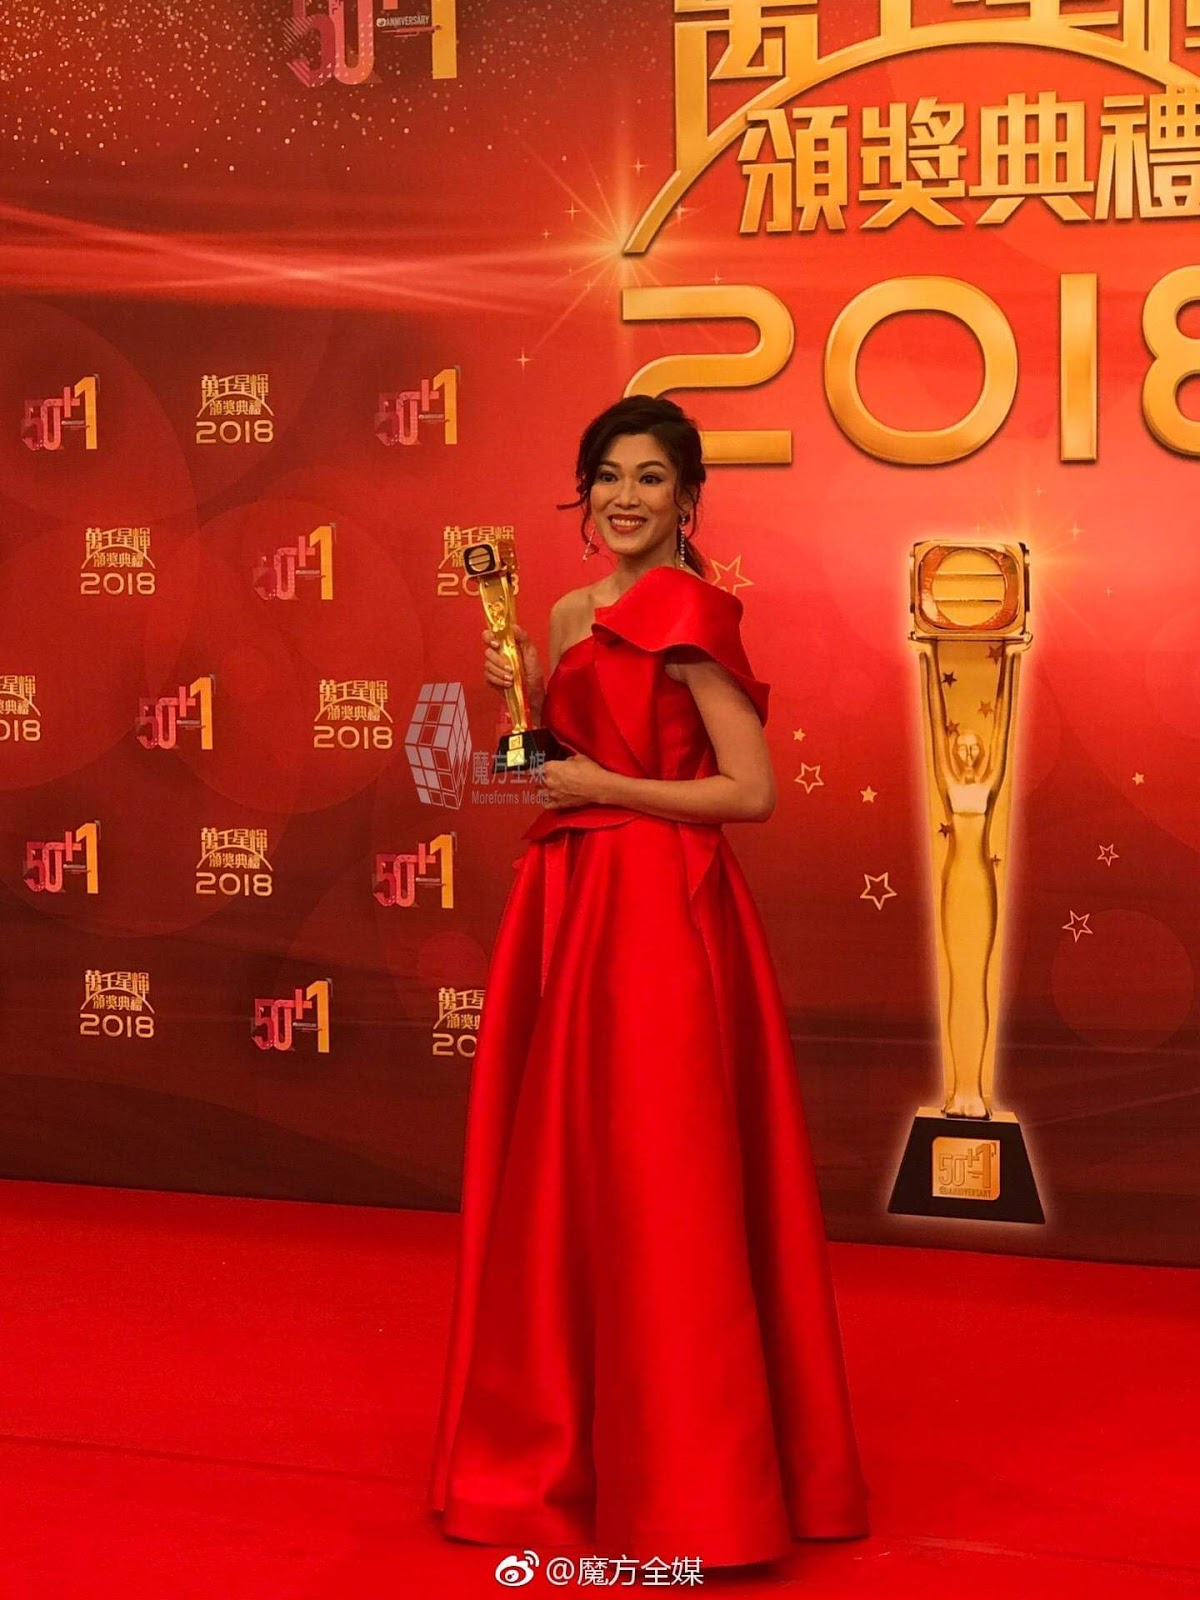 TVB Anniversary Awards 2018 Review